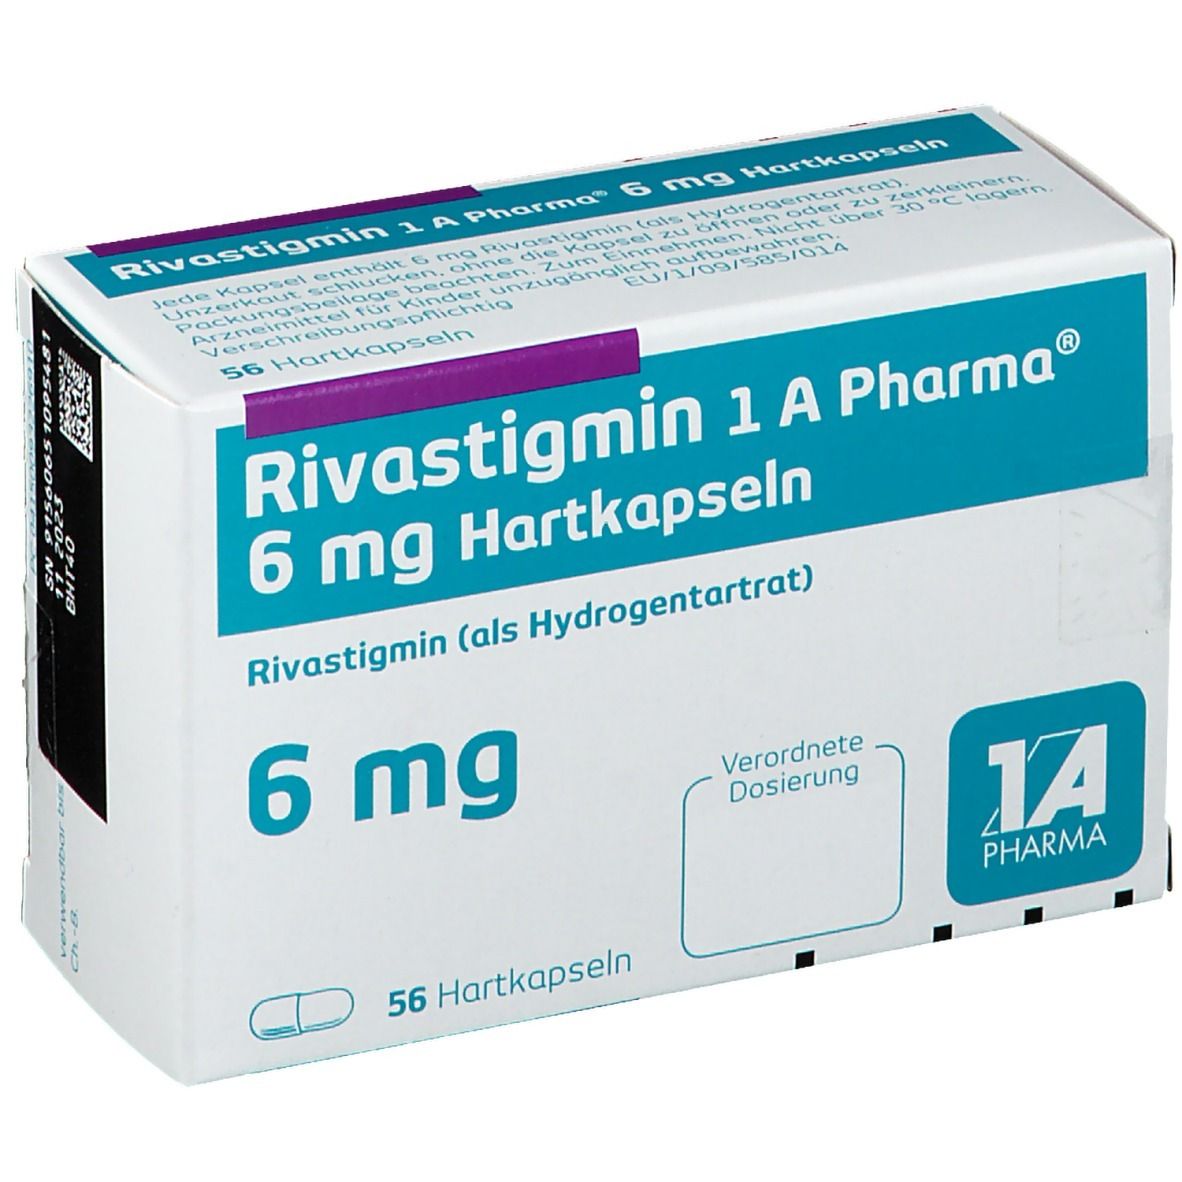 Rivastigmin 1 A Pharma® 6 mg